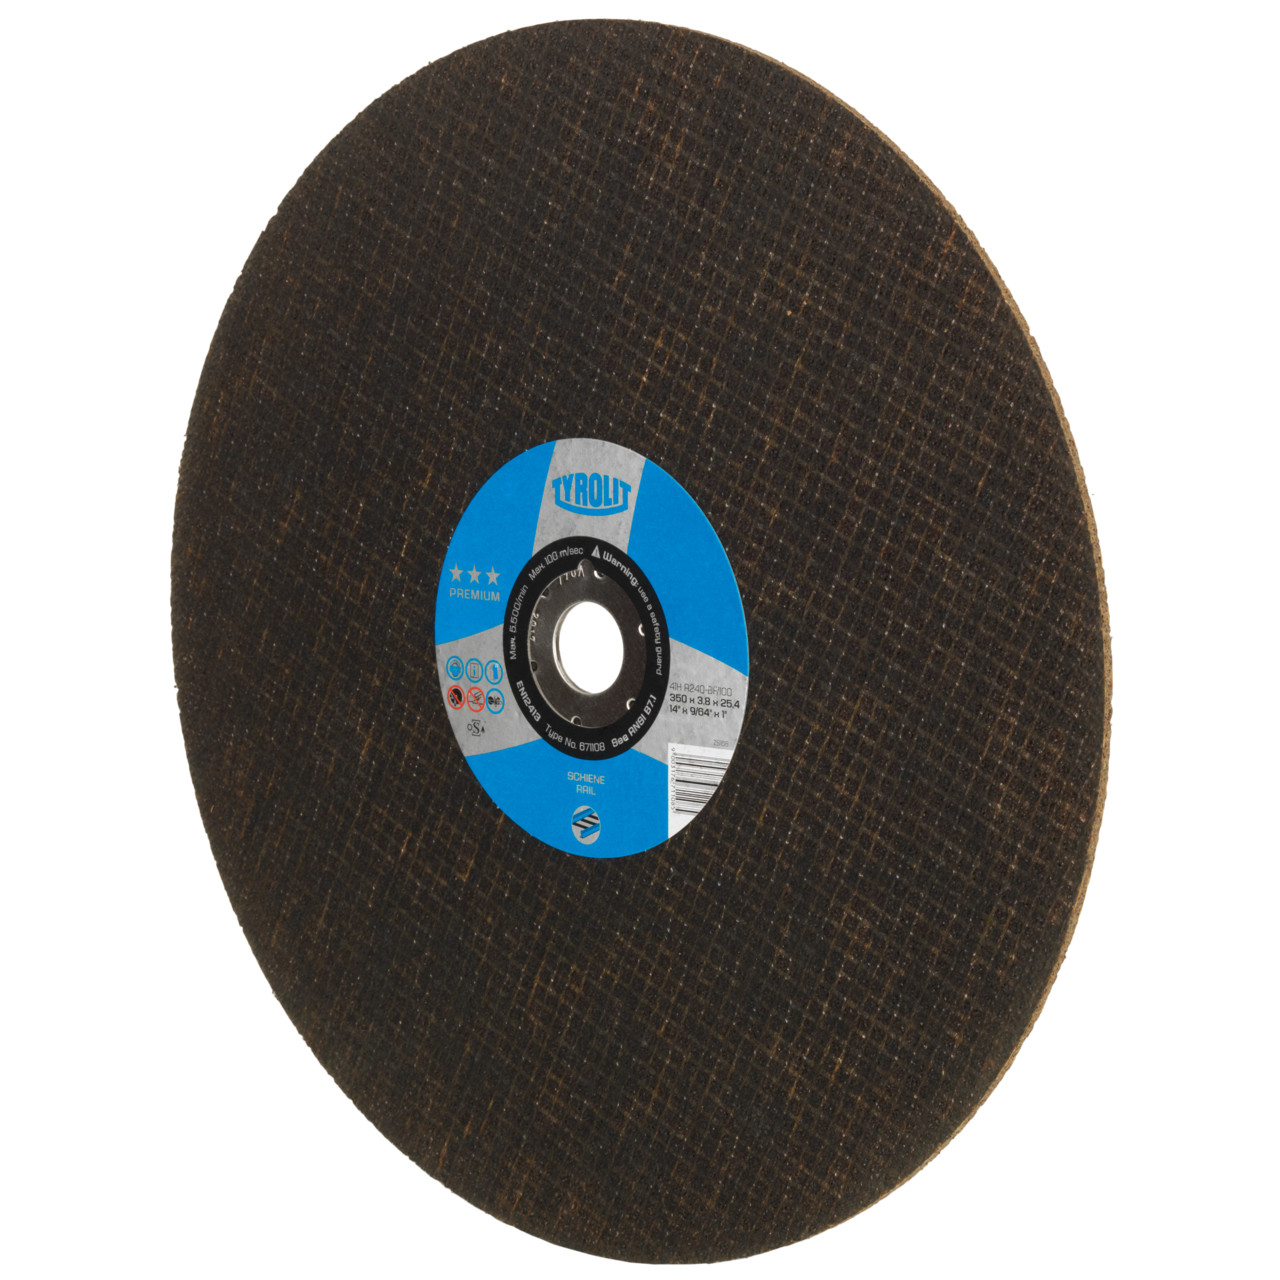 Tyrolit Cutting discs DxDxH 400x4.3x22.2 For rails, shape: 41 - straight version, Art. 671090